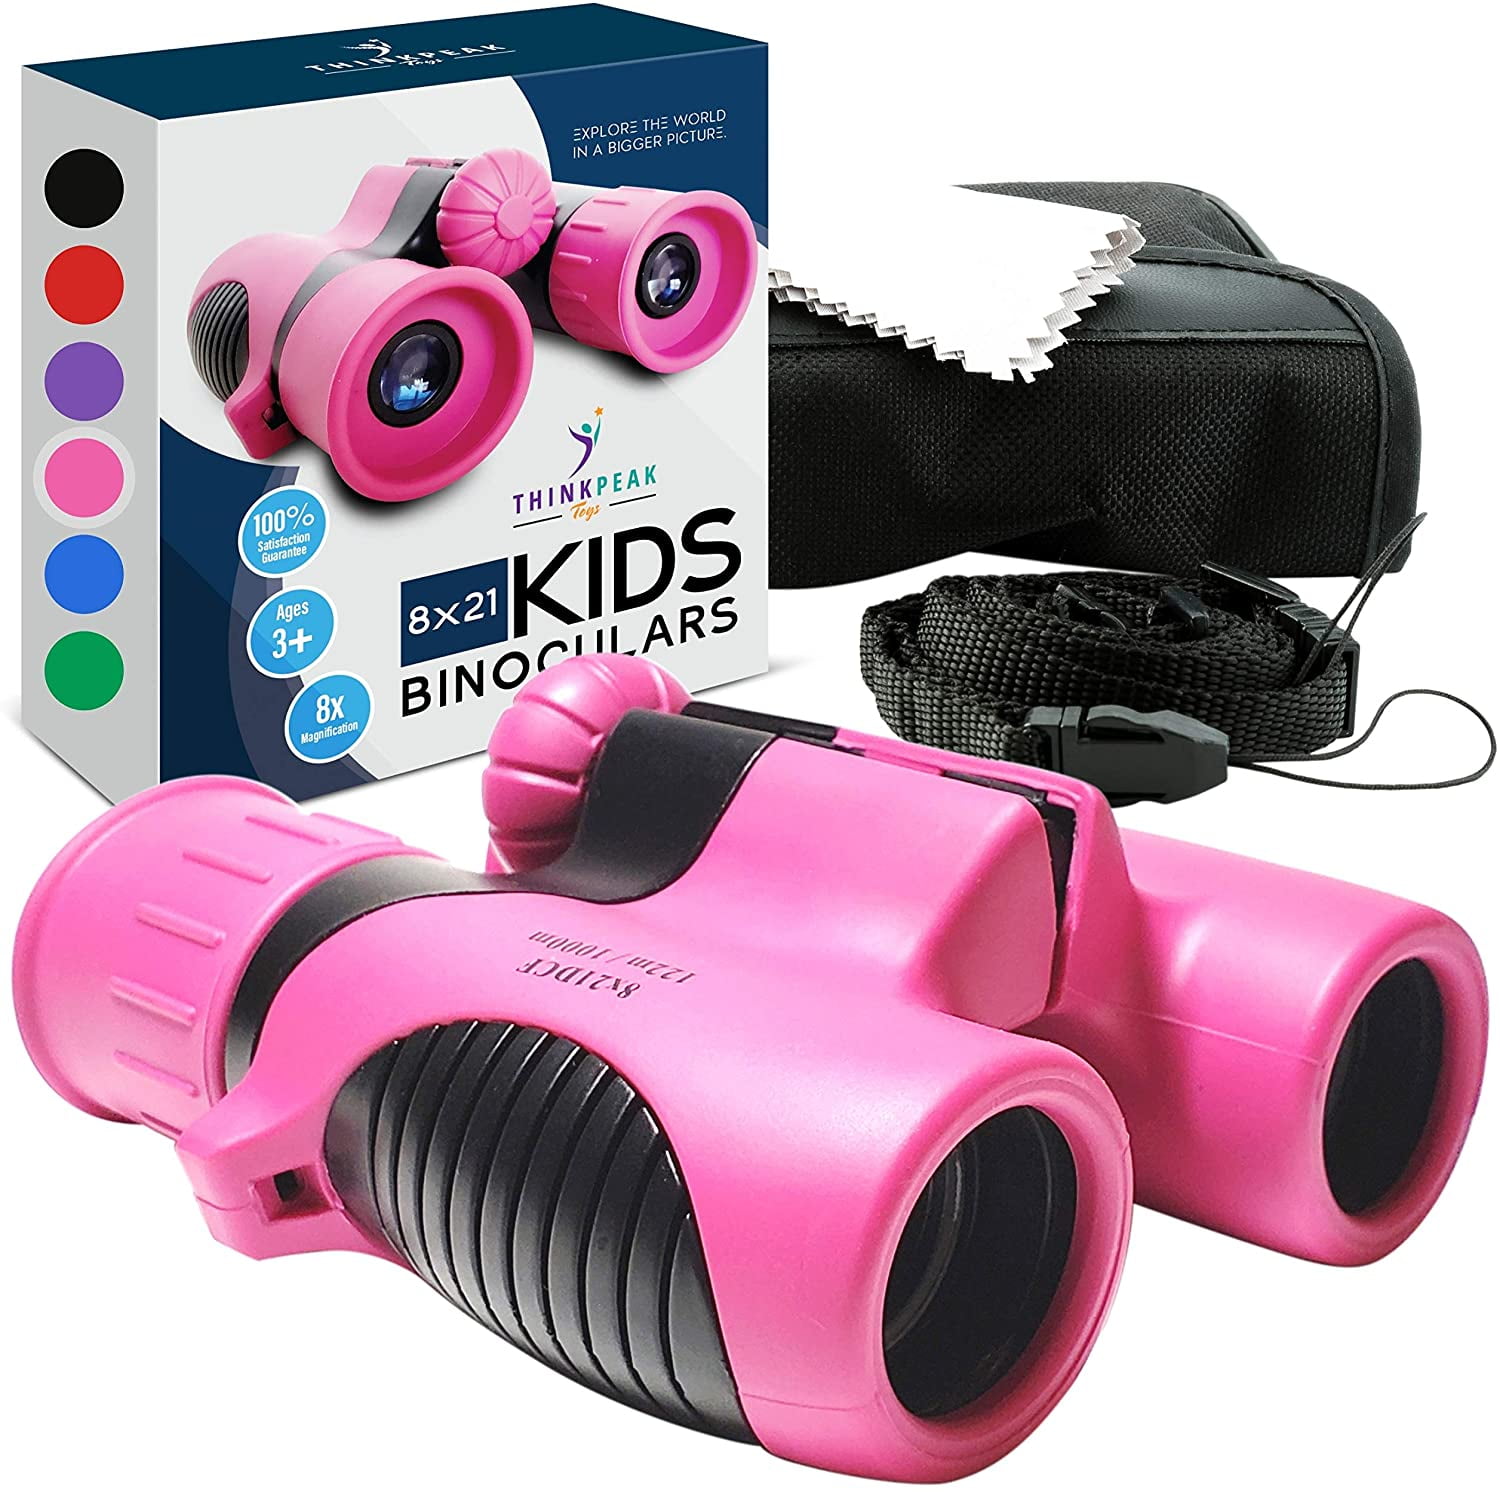 Kids Binoculars Telescope Toy For Bird Watching Camping Outdoors Gaming Red 